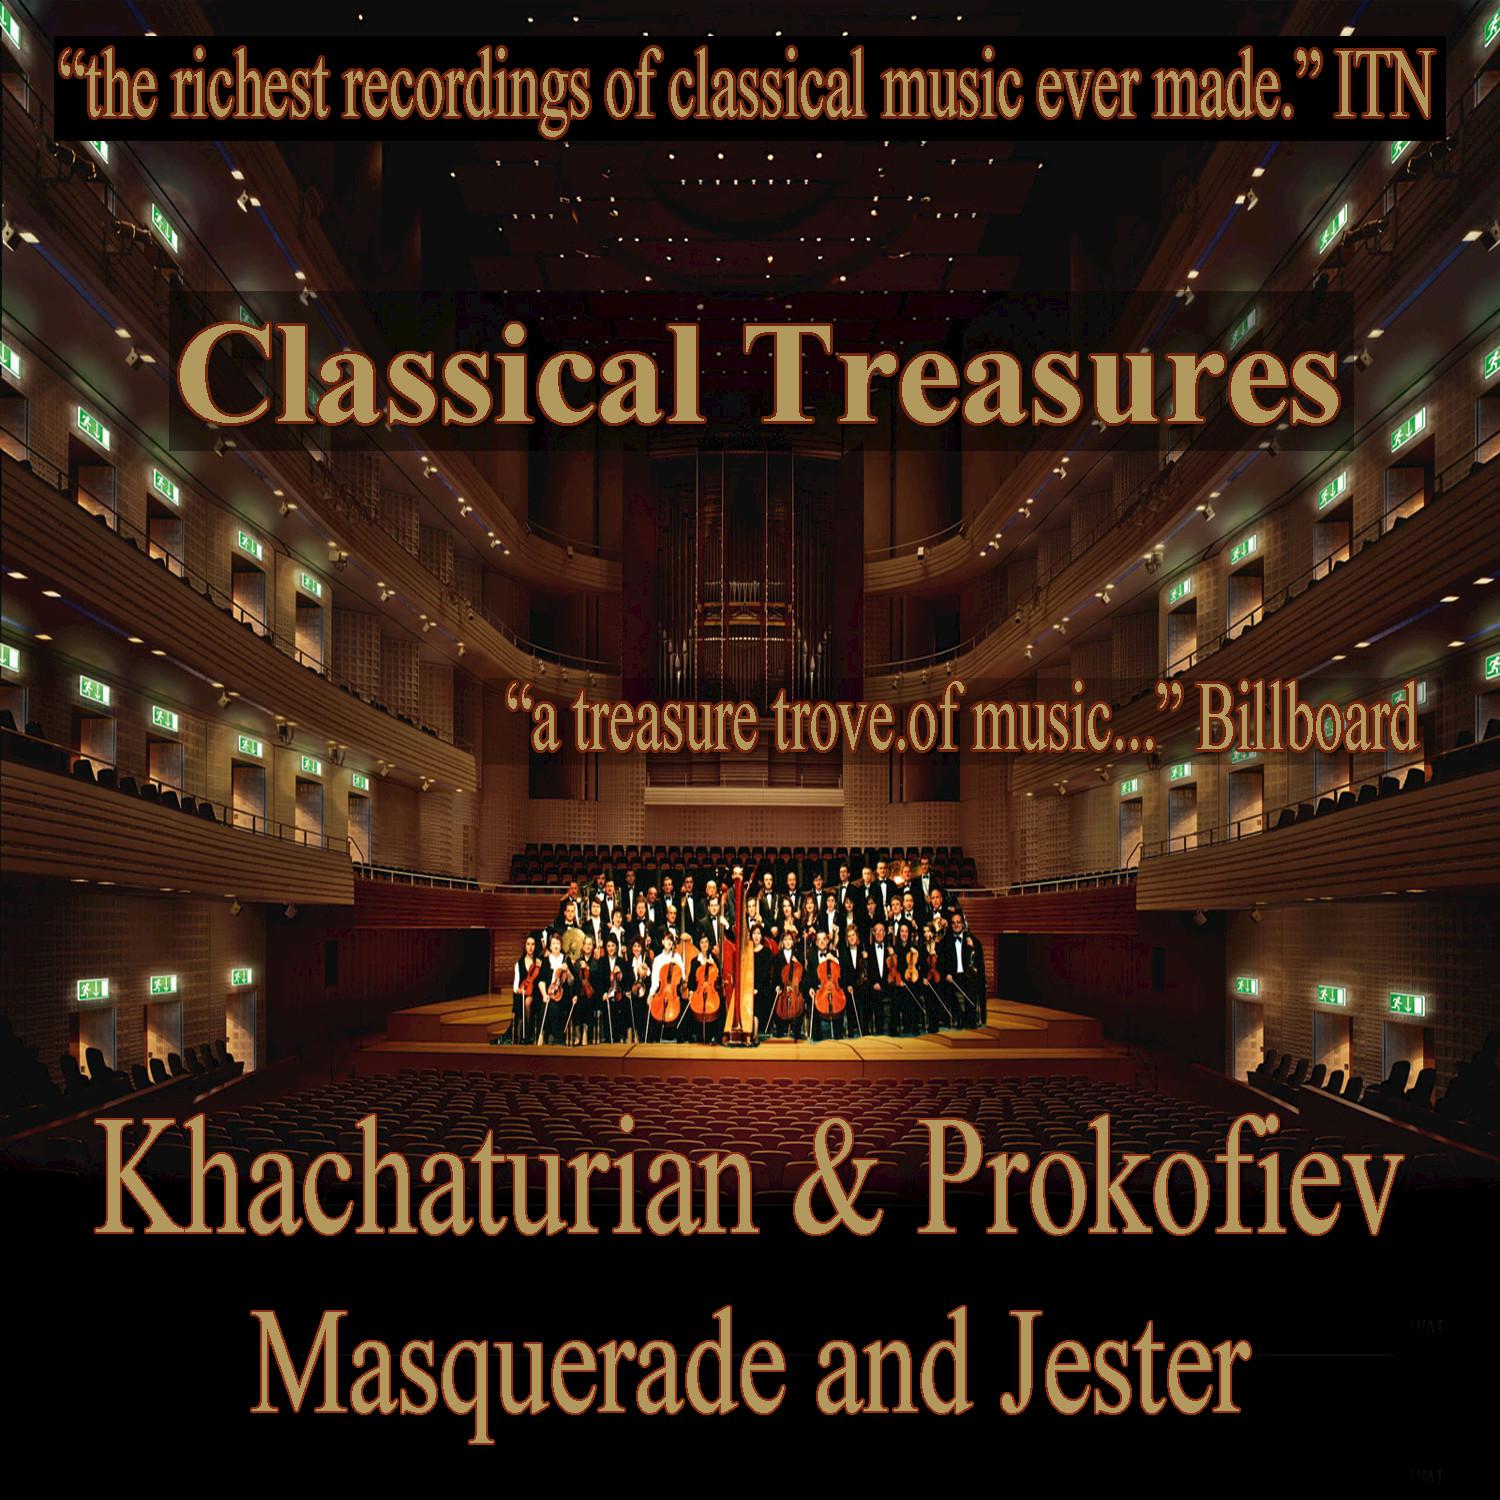 Khachaturian & Prokofiev: Masquerade and Jester